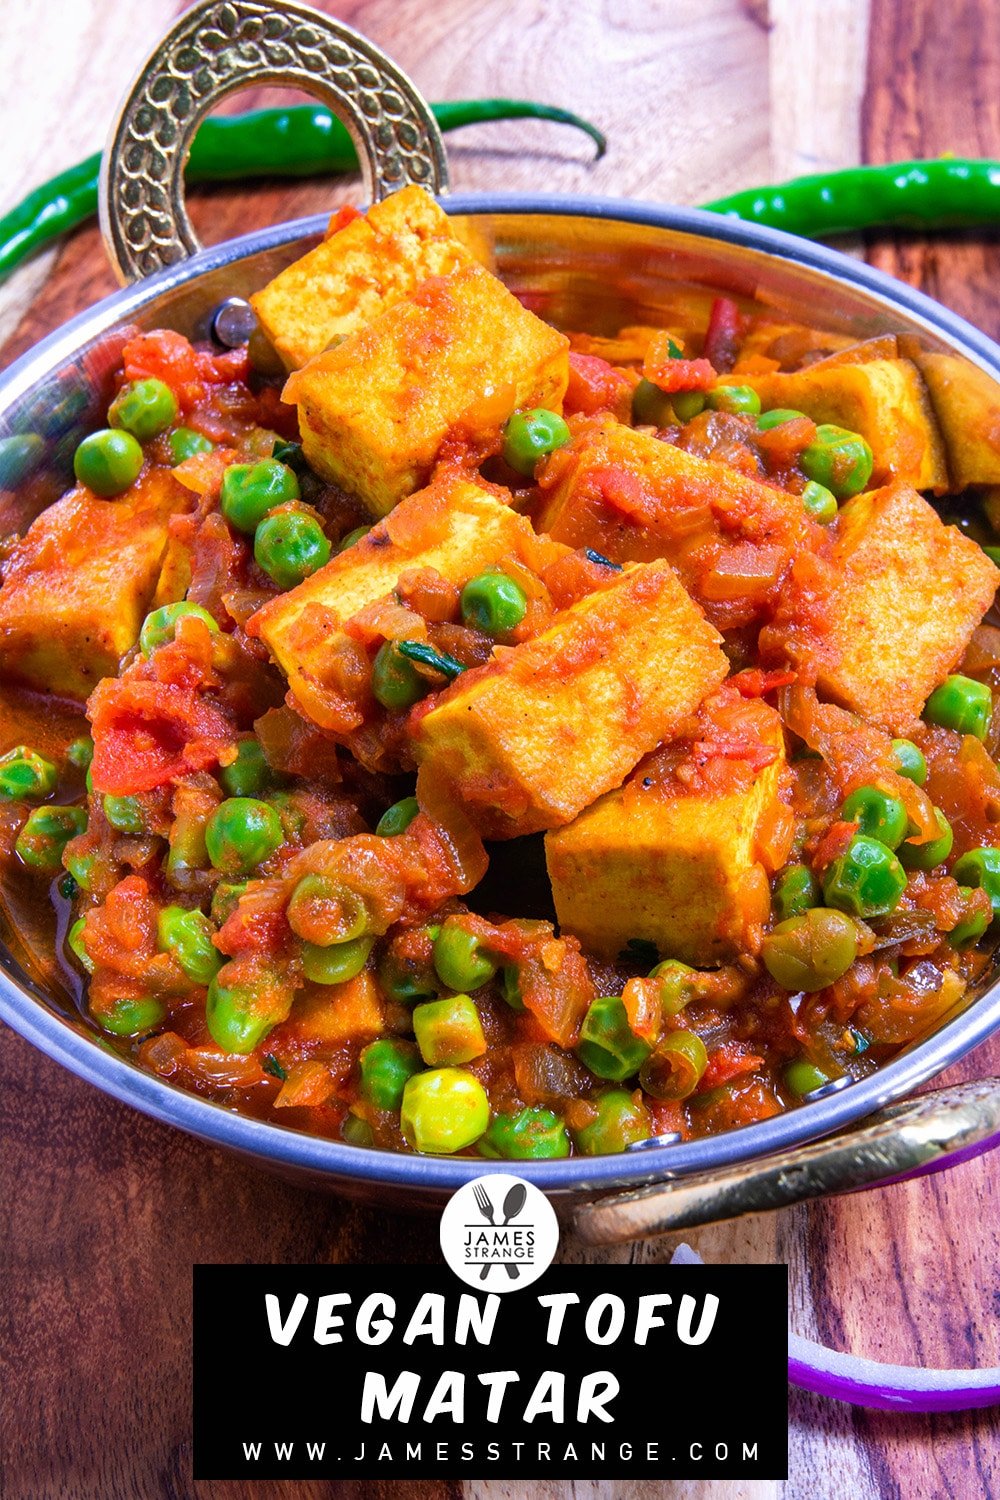 Vegan tofu matar recipe 🍛 - James Strange